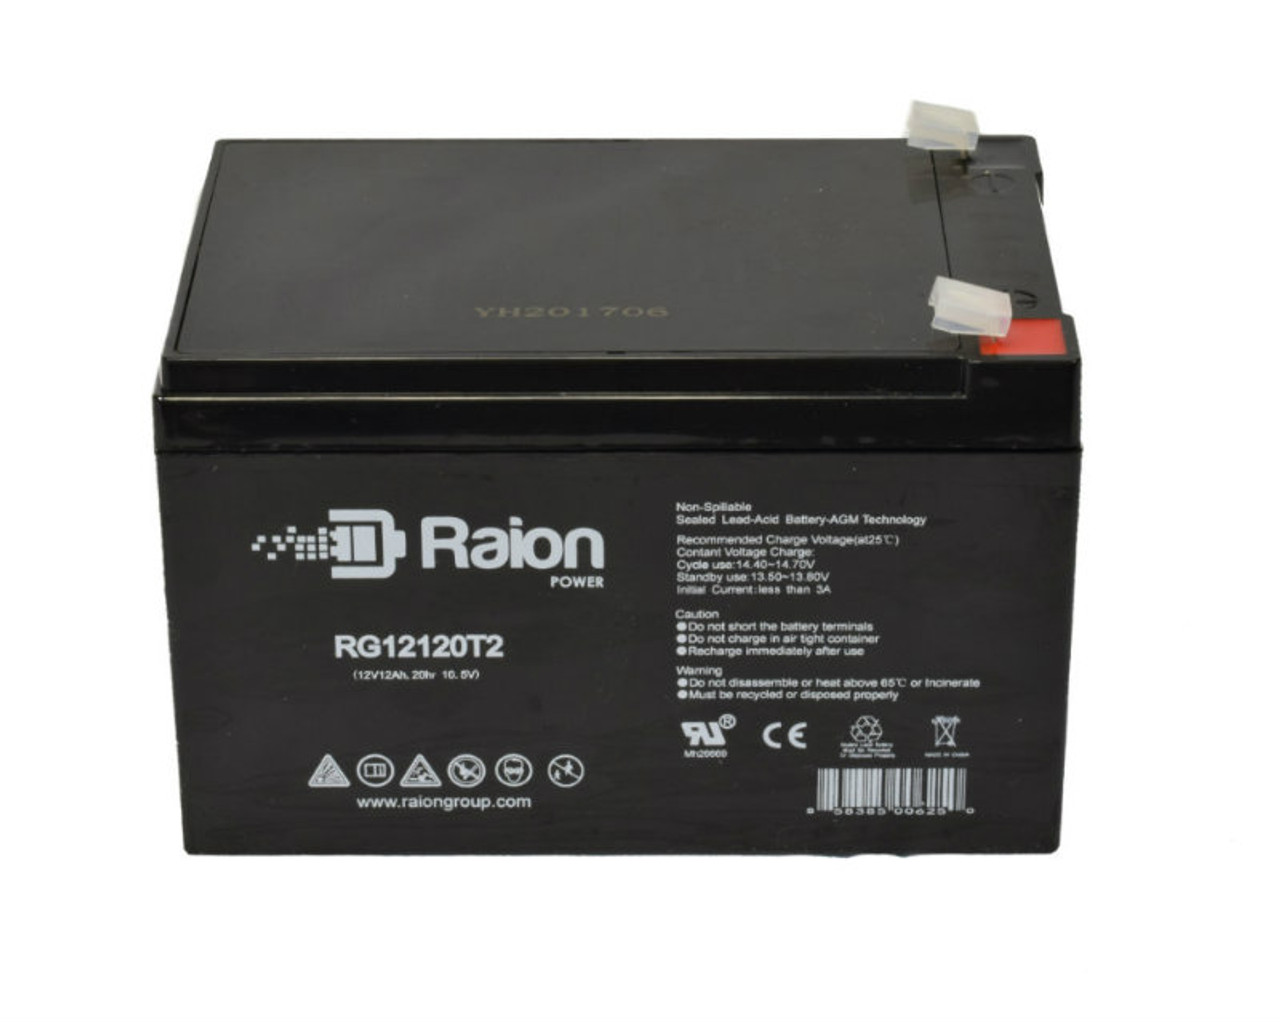 Raion Power RG12120T2 SLA Battery for Daymak Sunshine RC